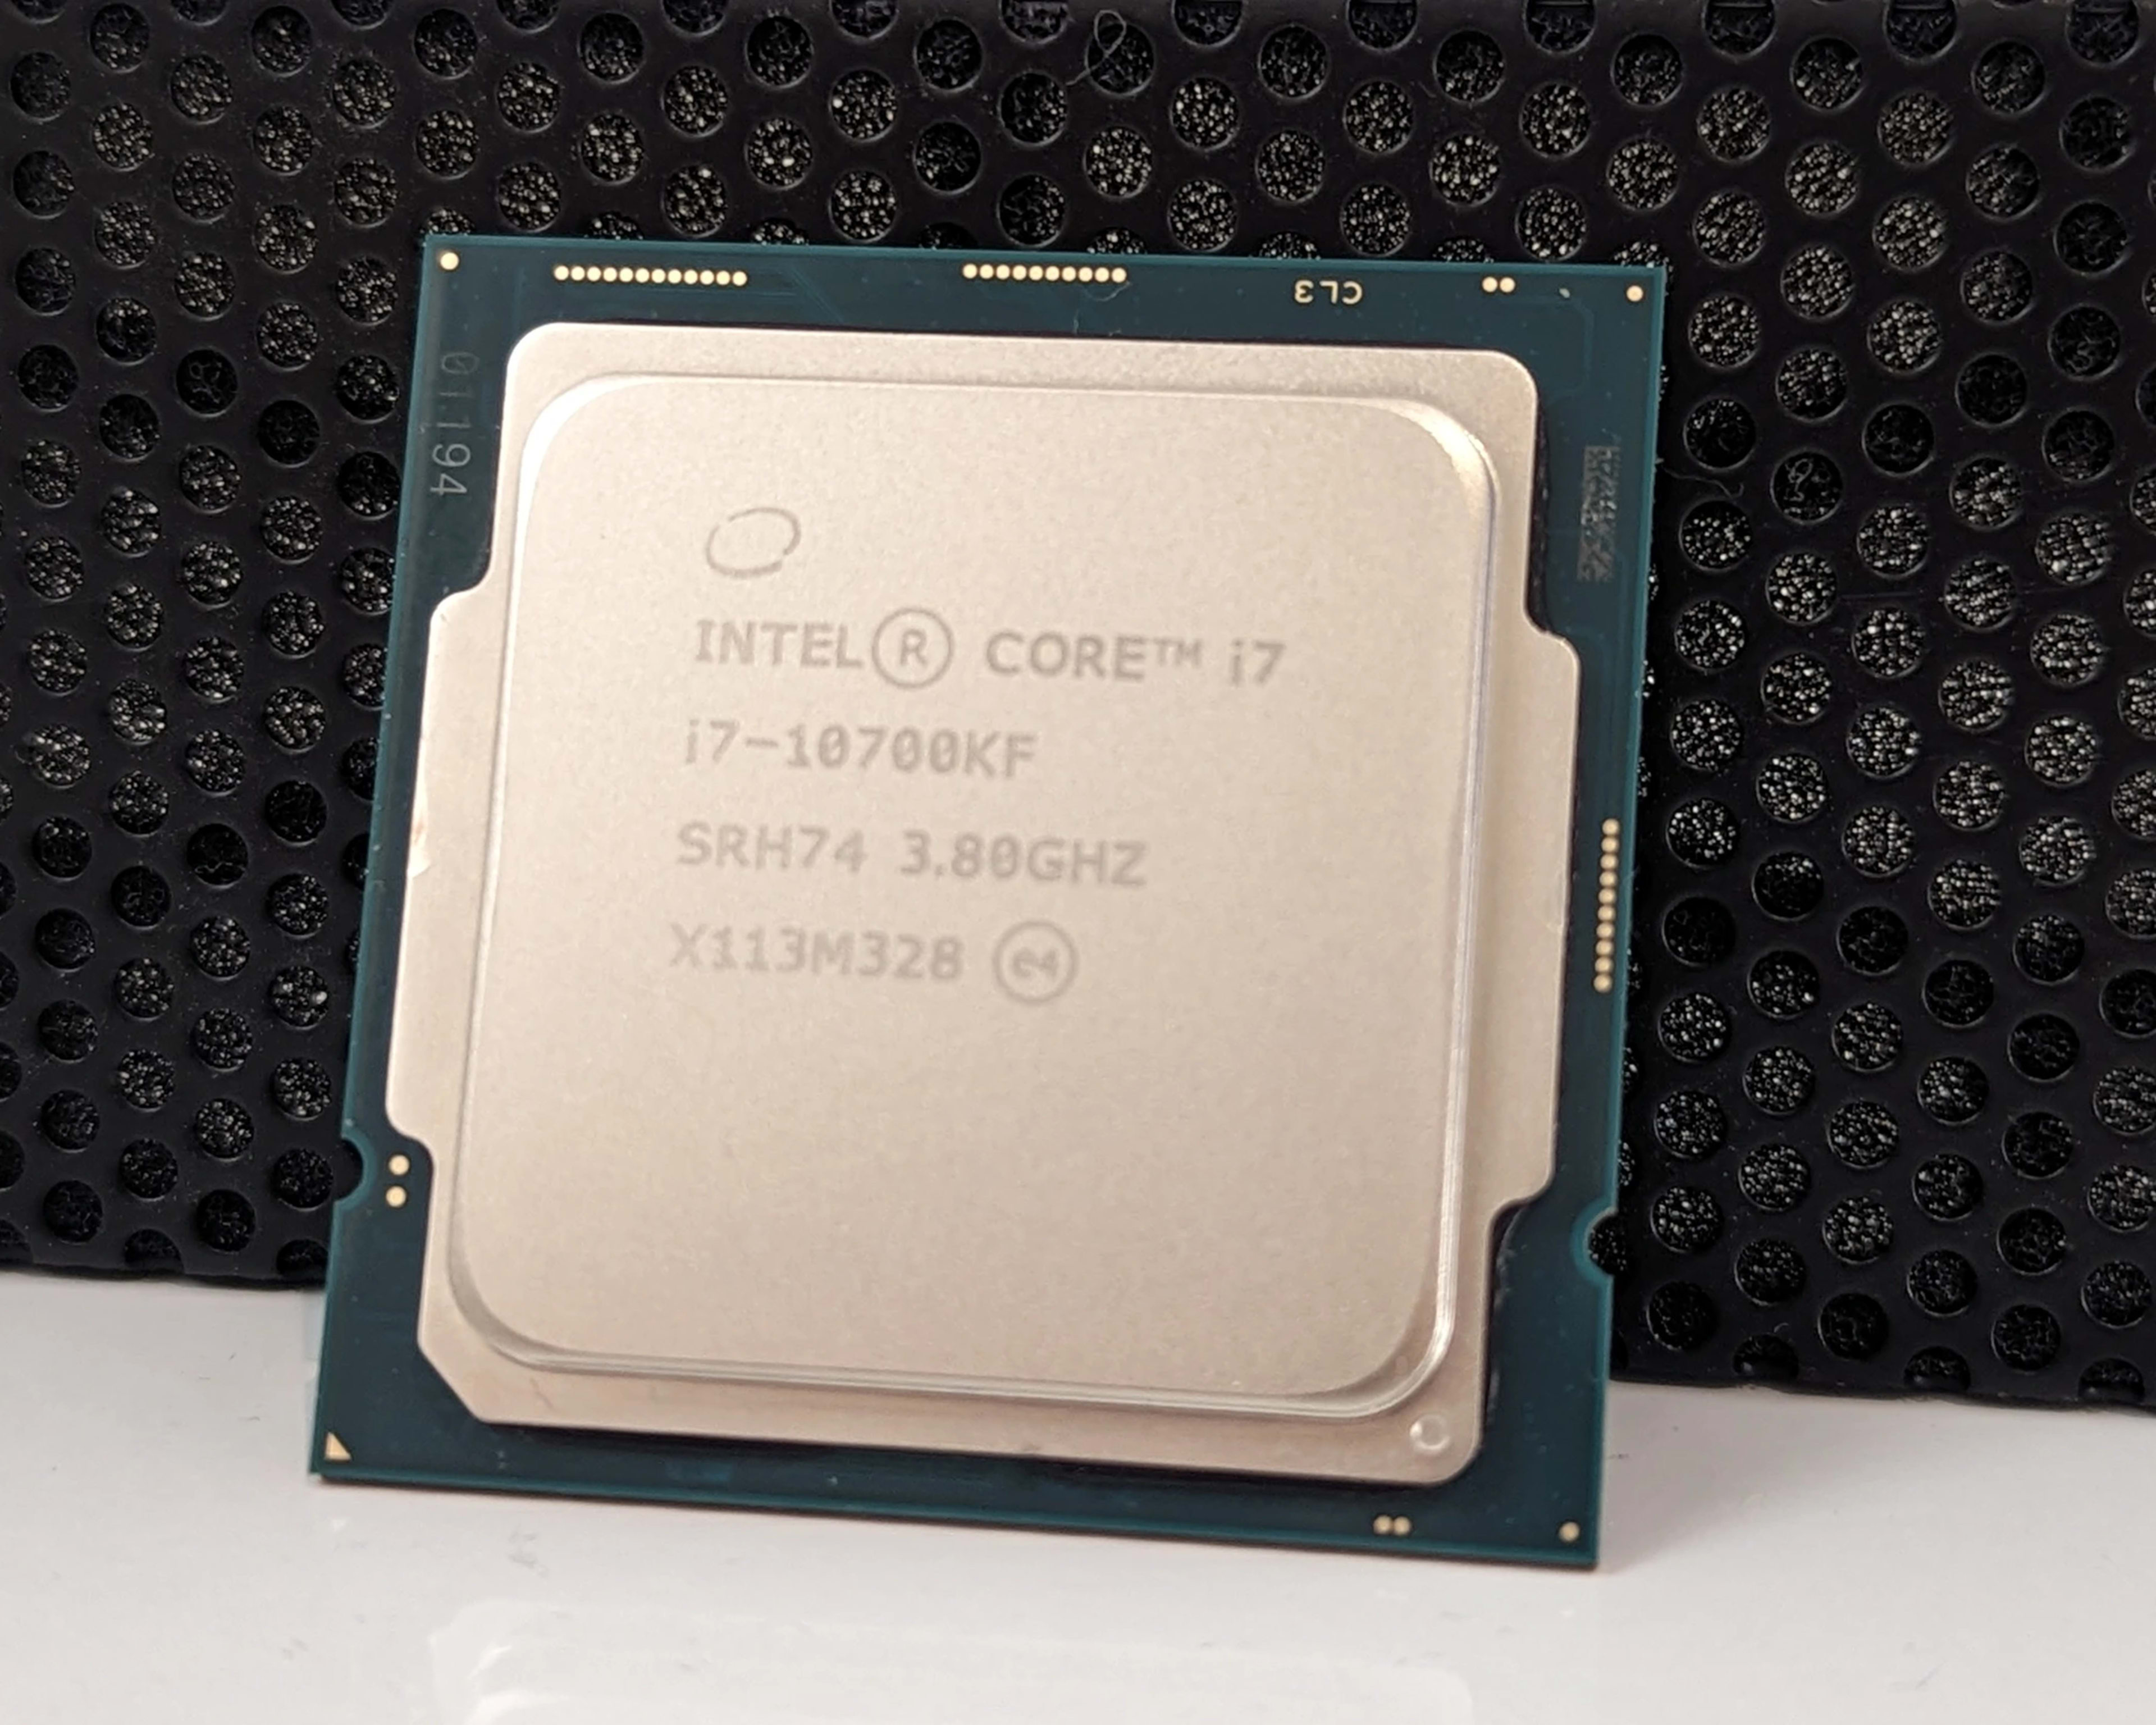 Intel Core i7-10700KF, 8C/16T CPU, 3.8 GHz, LGA 1200